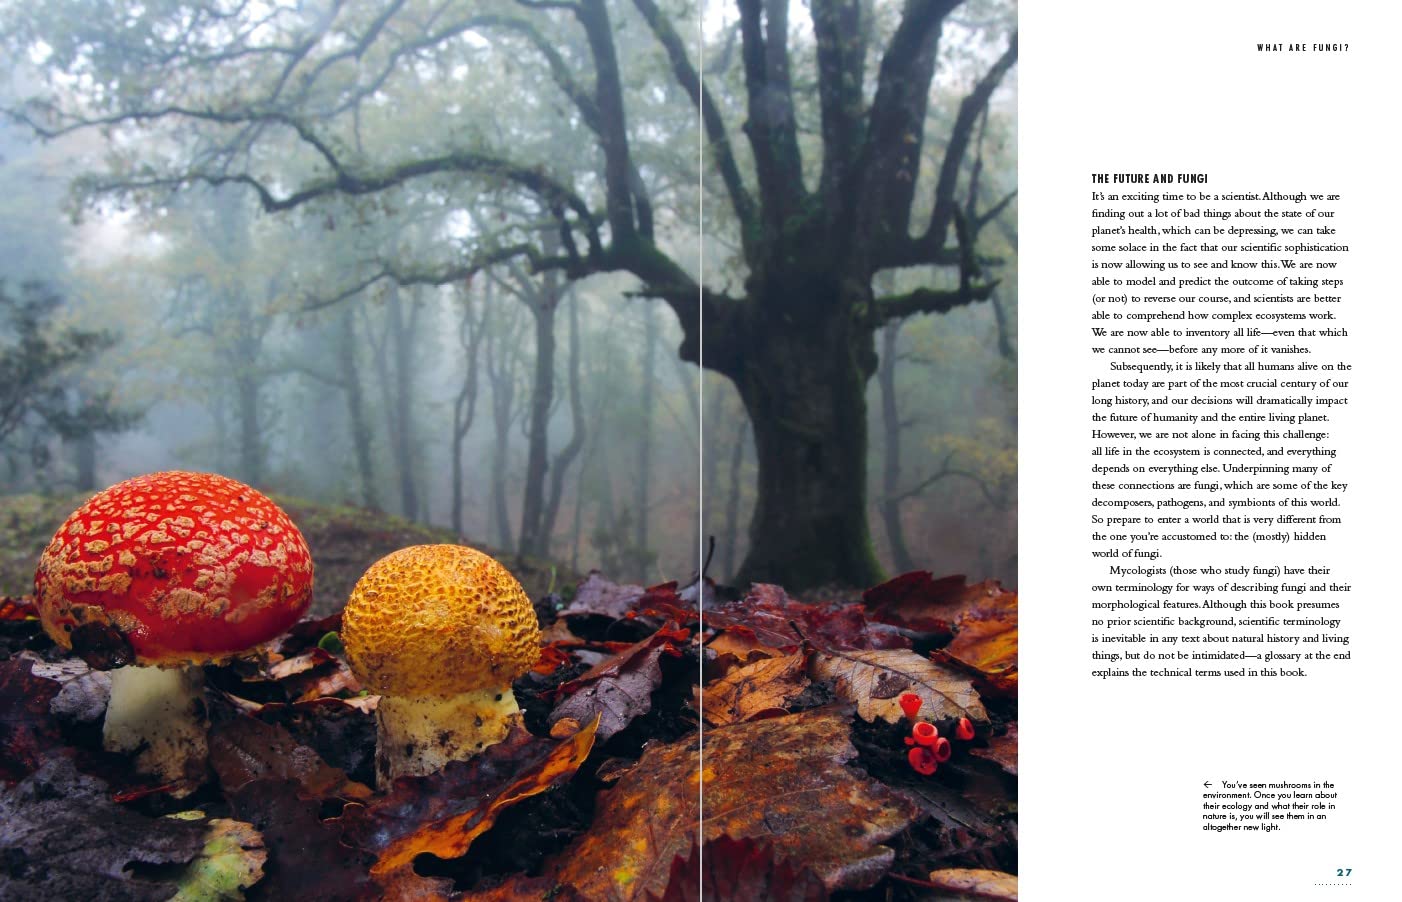 The Lives of Fungi: By Britt Bunyard